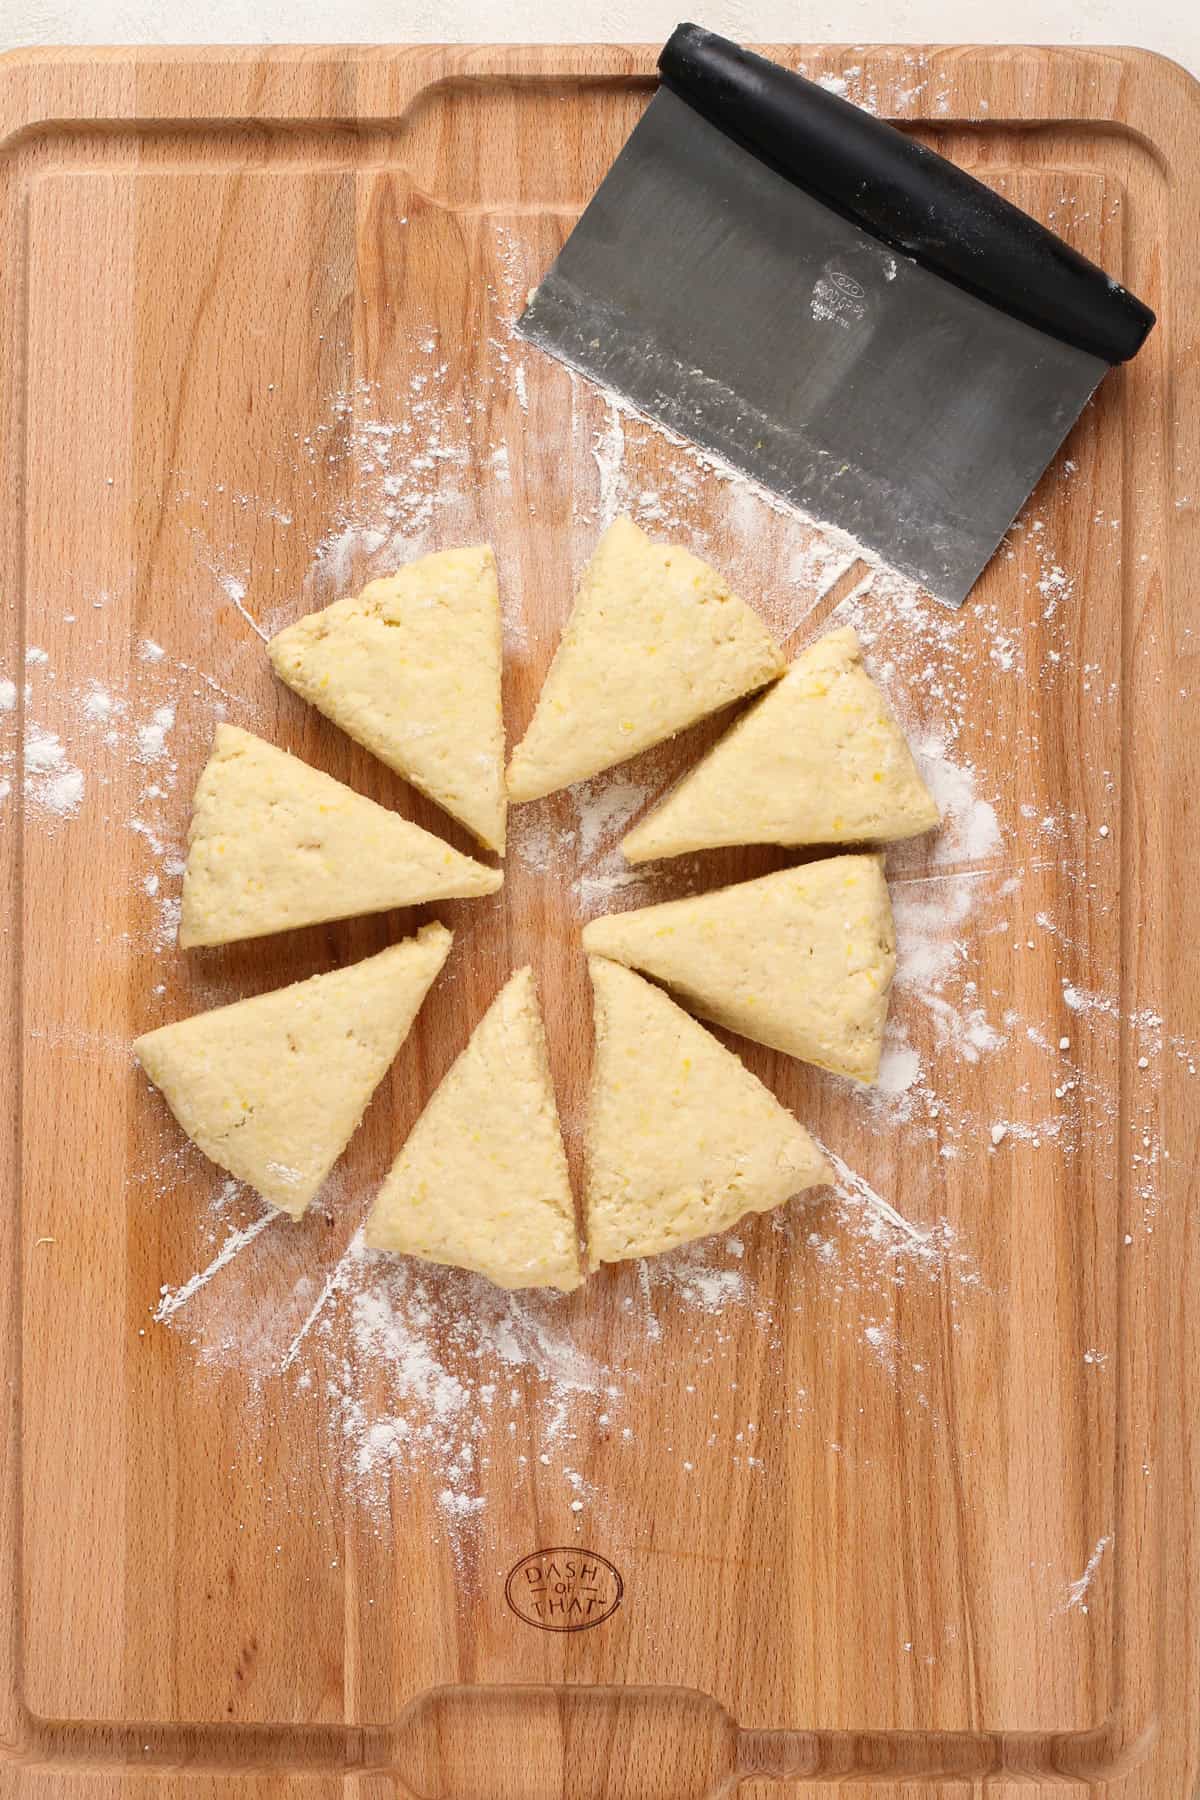 Lemon scone dough cut into triangles on a wooden board.